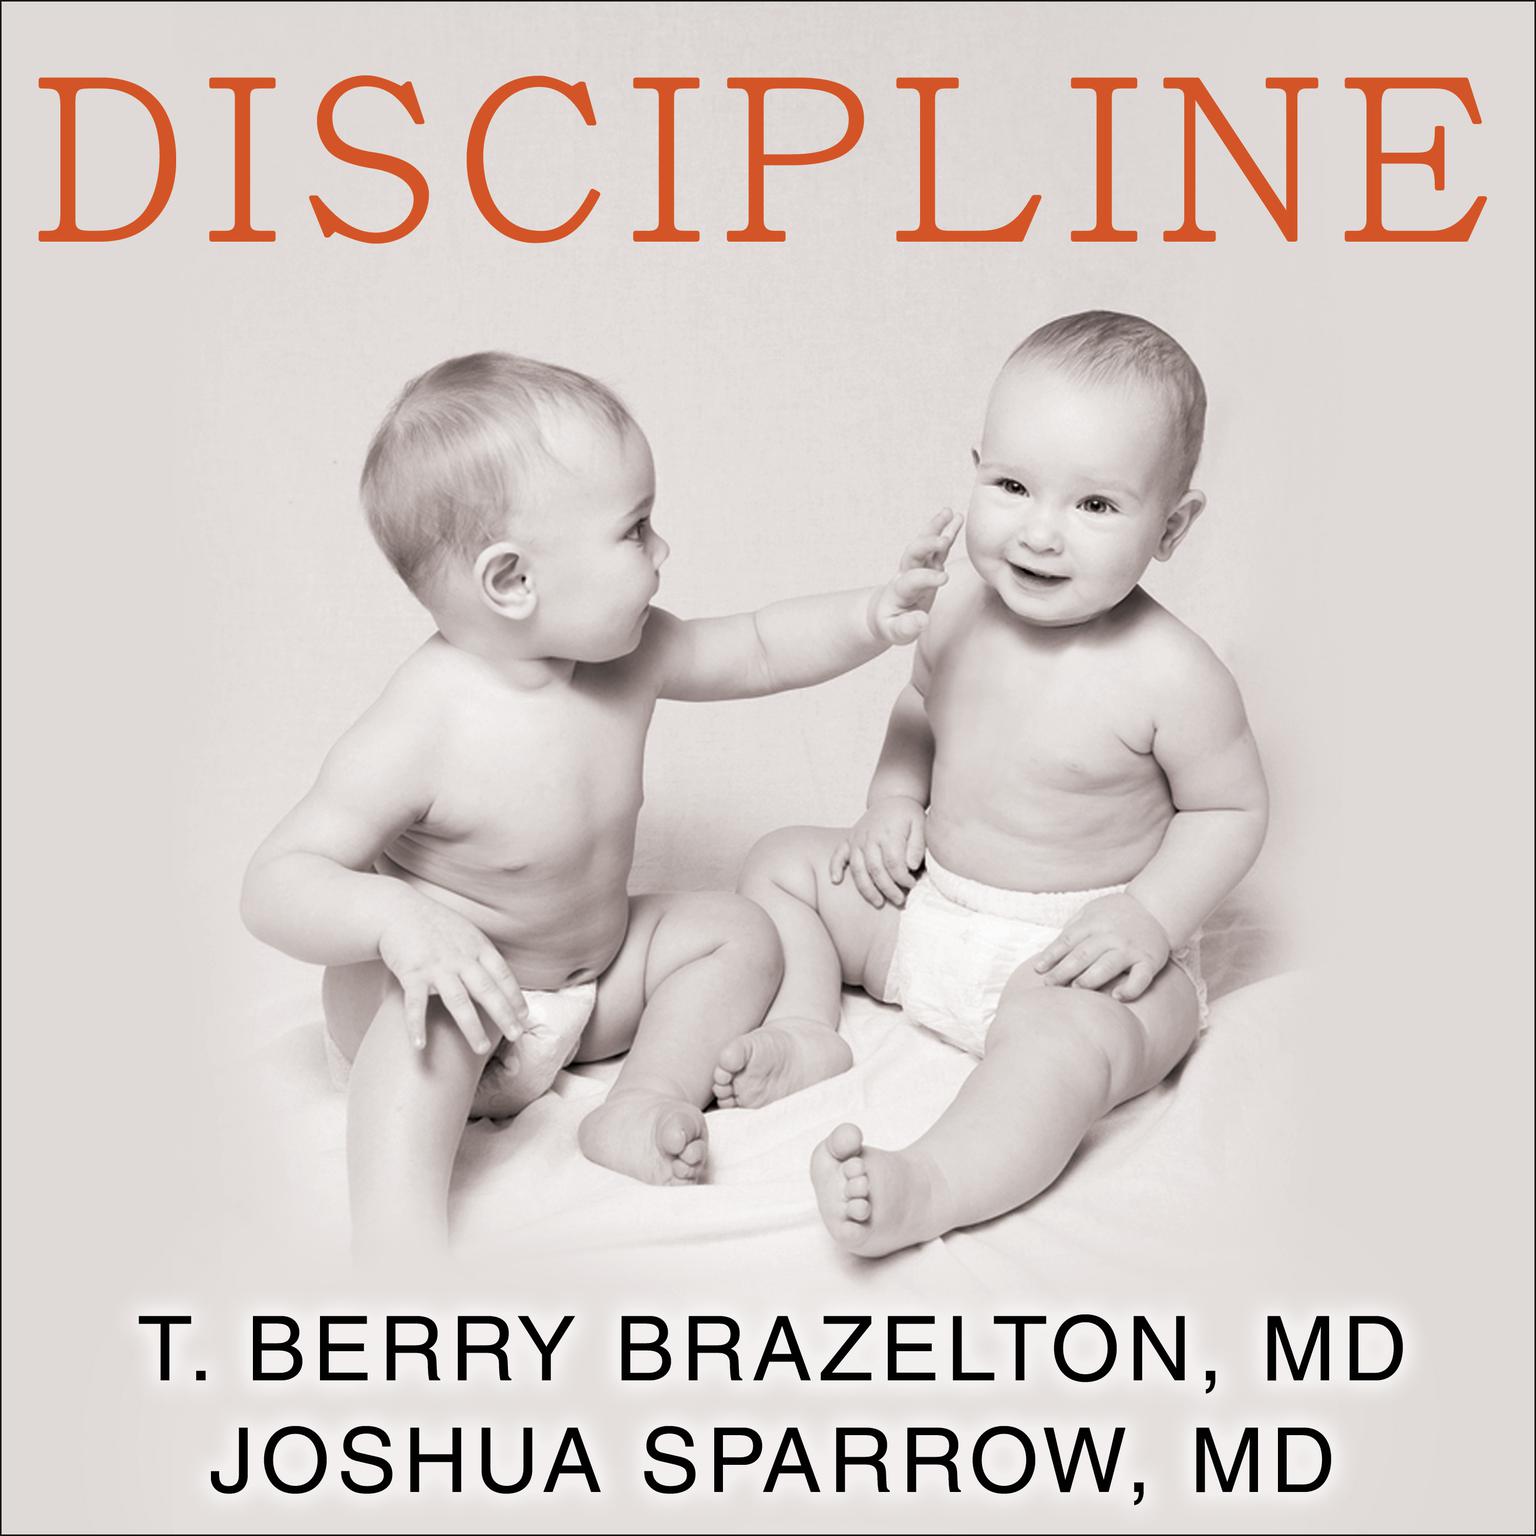 Discipline: The Brazelton Way, Second Edition Audiobook, by T. Berry Brazelton